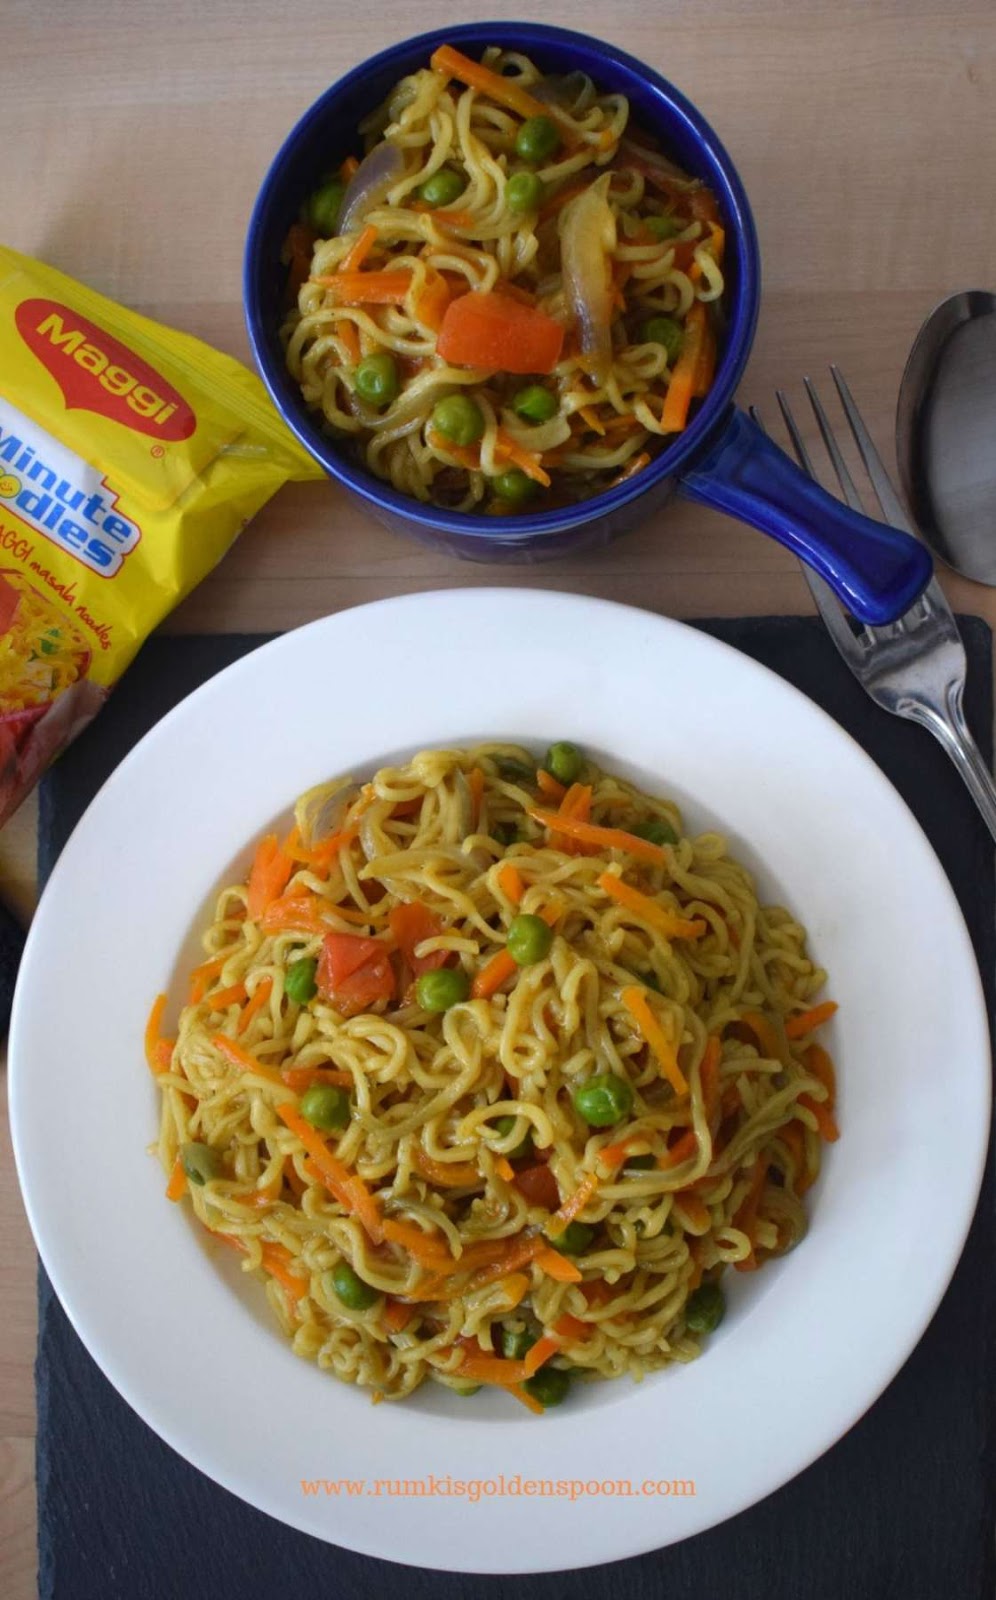 maggi recipe with vegetables, maggi masala recipe, instant noodles recipe, Vegetable Maggi Noodles, Indian recipe, Vegetarian recipe, vegan recipe, quick and easy recipe, healthy recipe, Rumki's Golden Spoon 